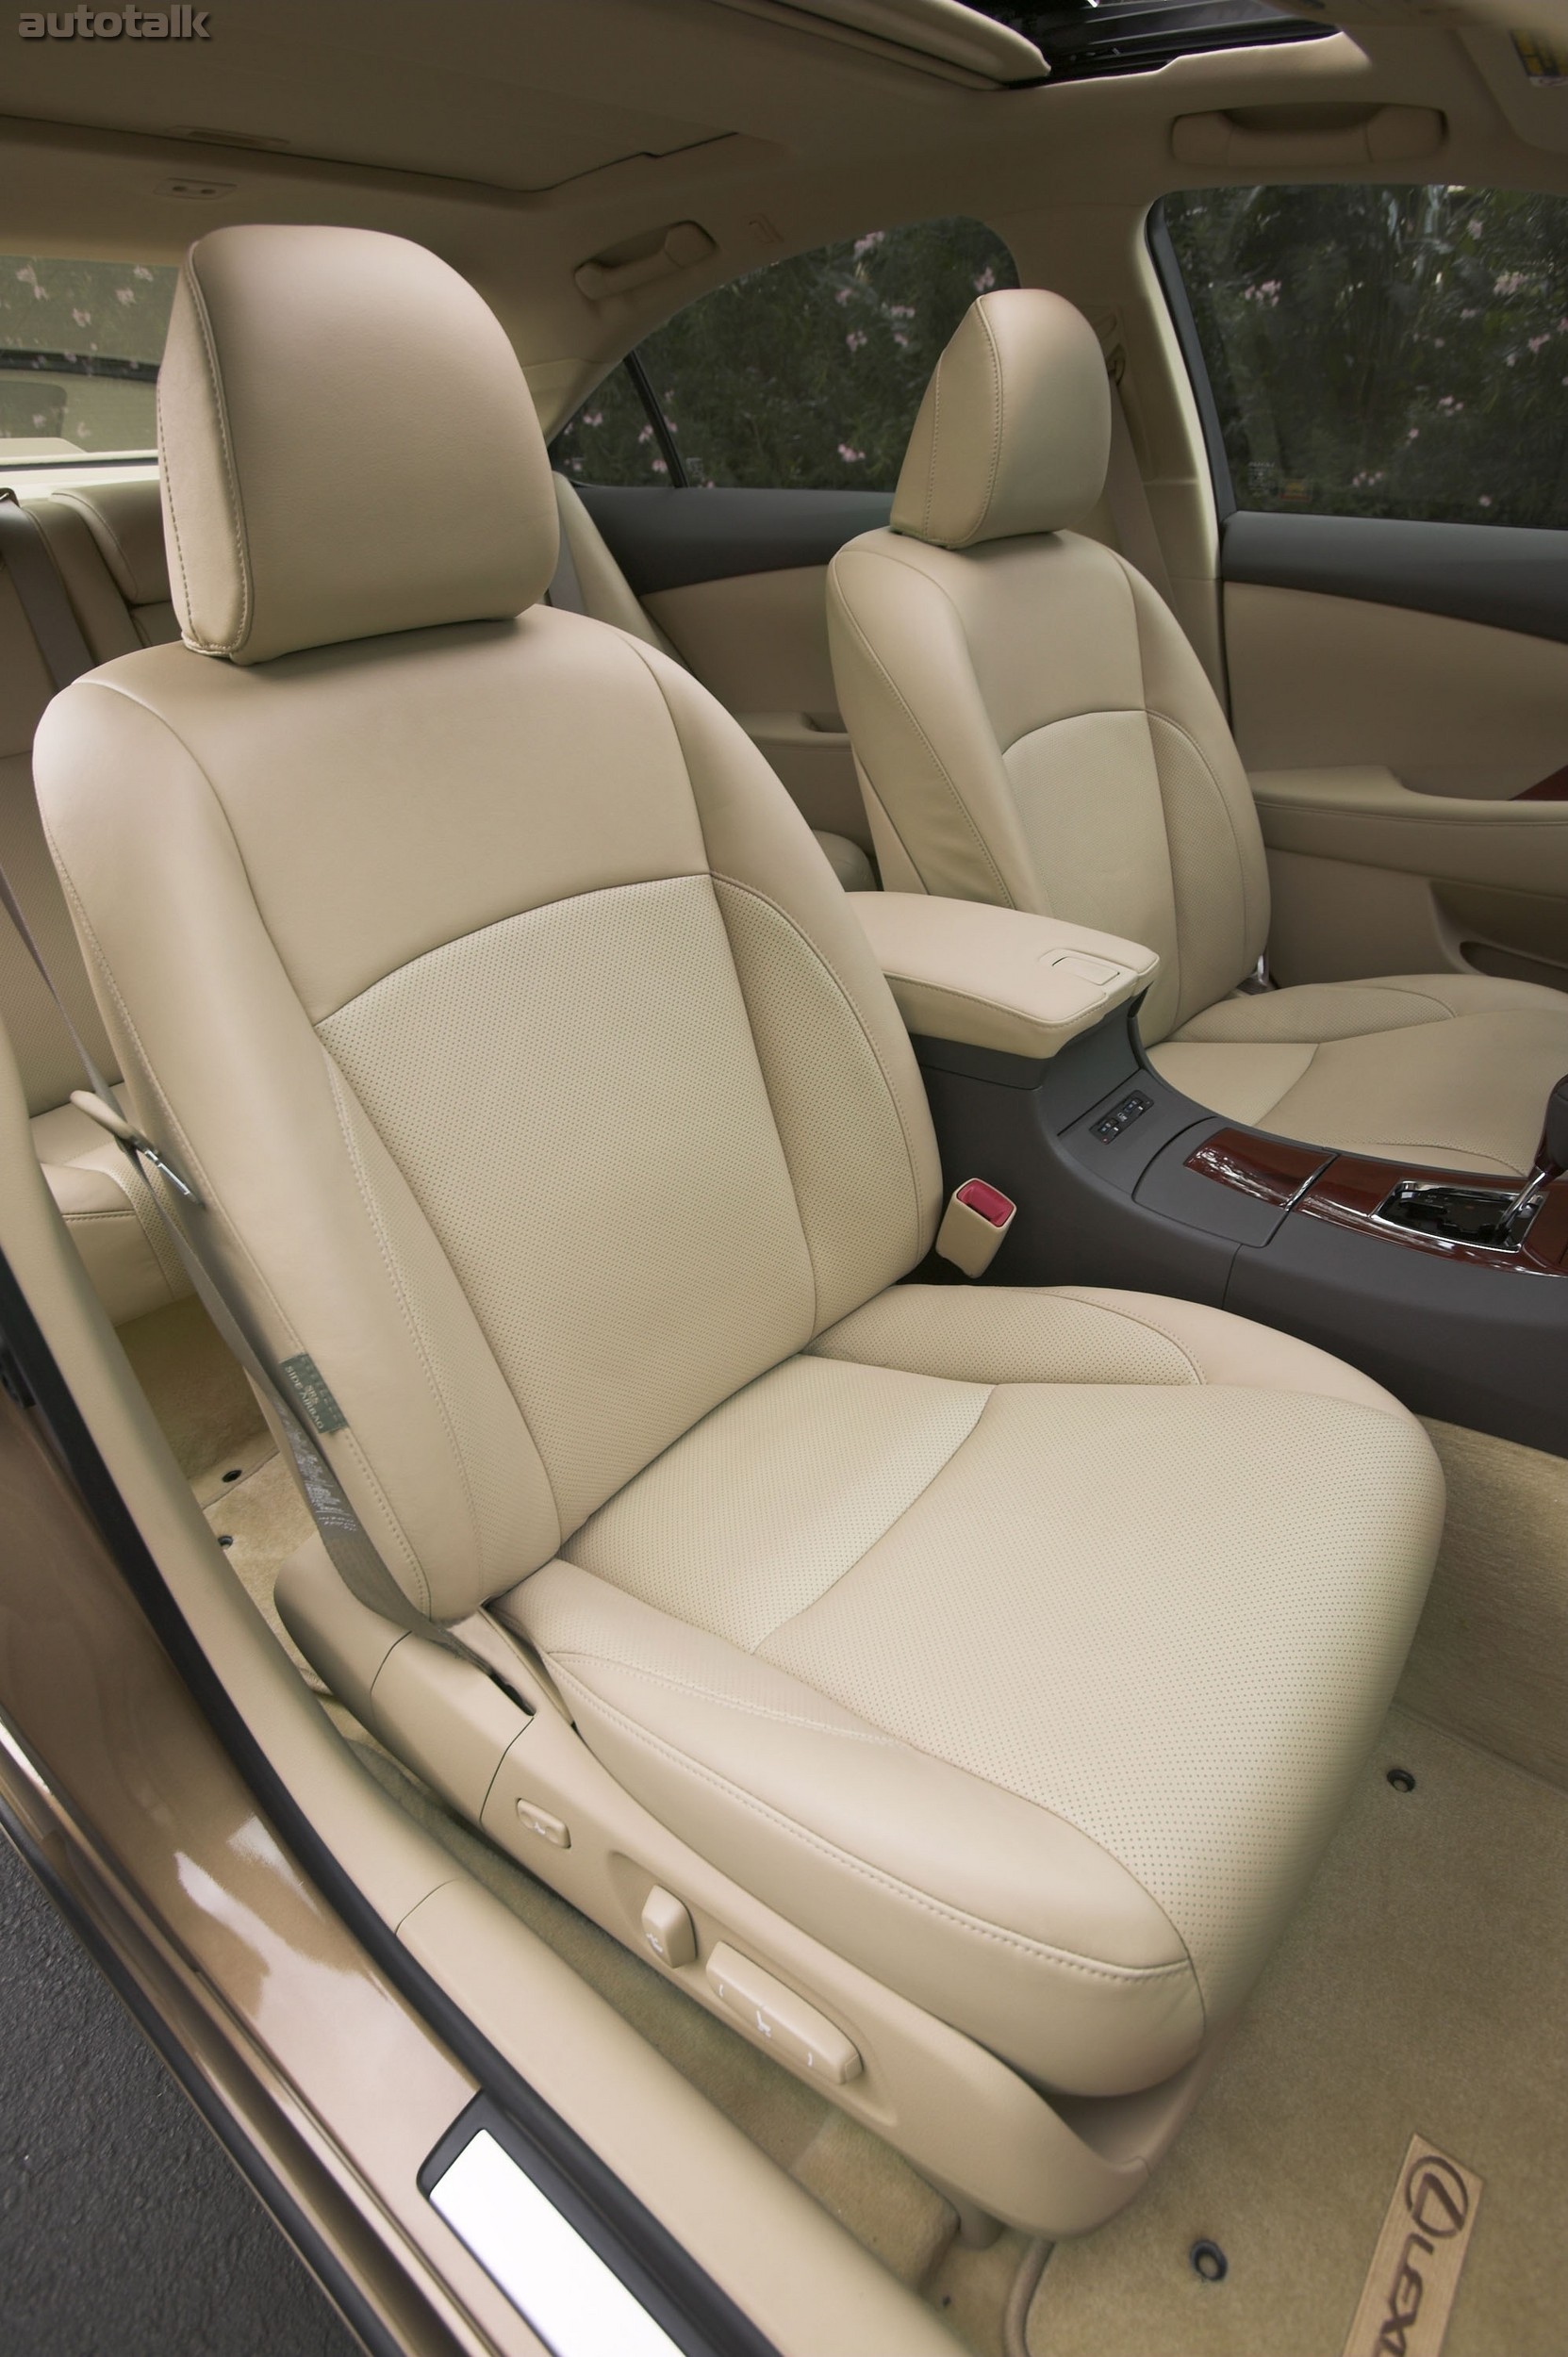 2009 Lexus ES 350 Leather Seats